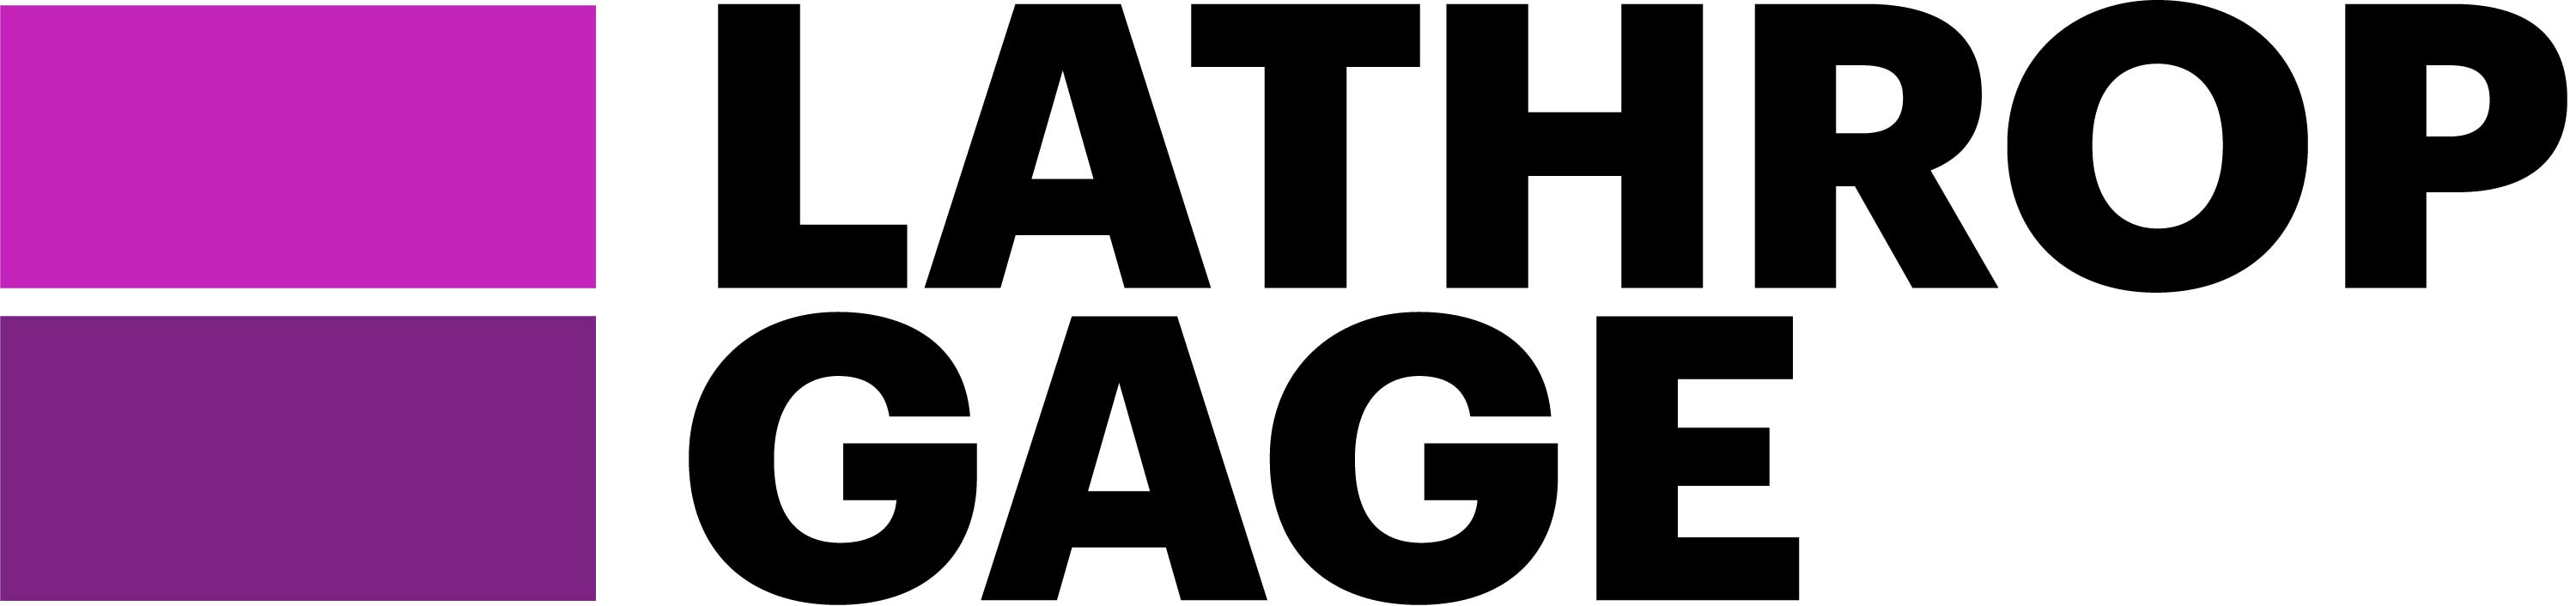 Gage Logo - Lathrop Gage Logo Primary